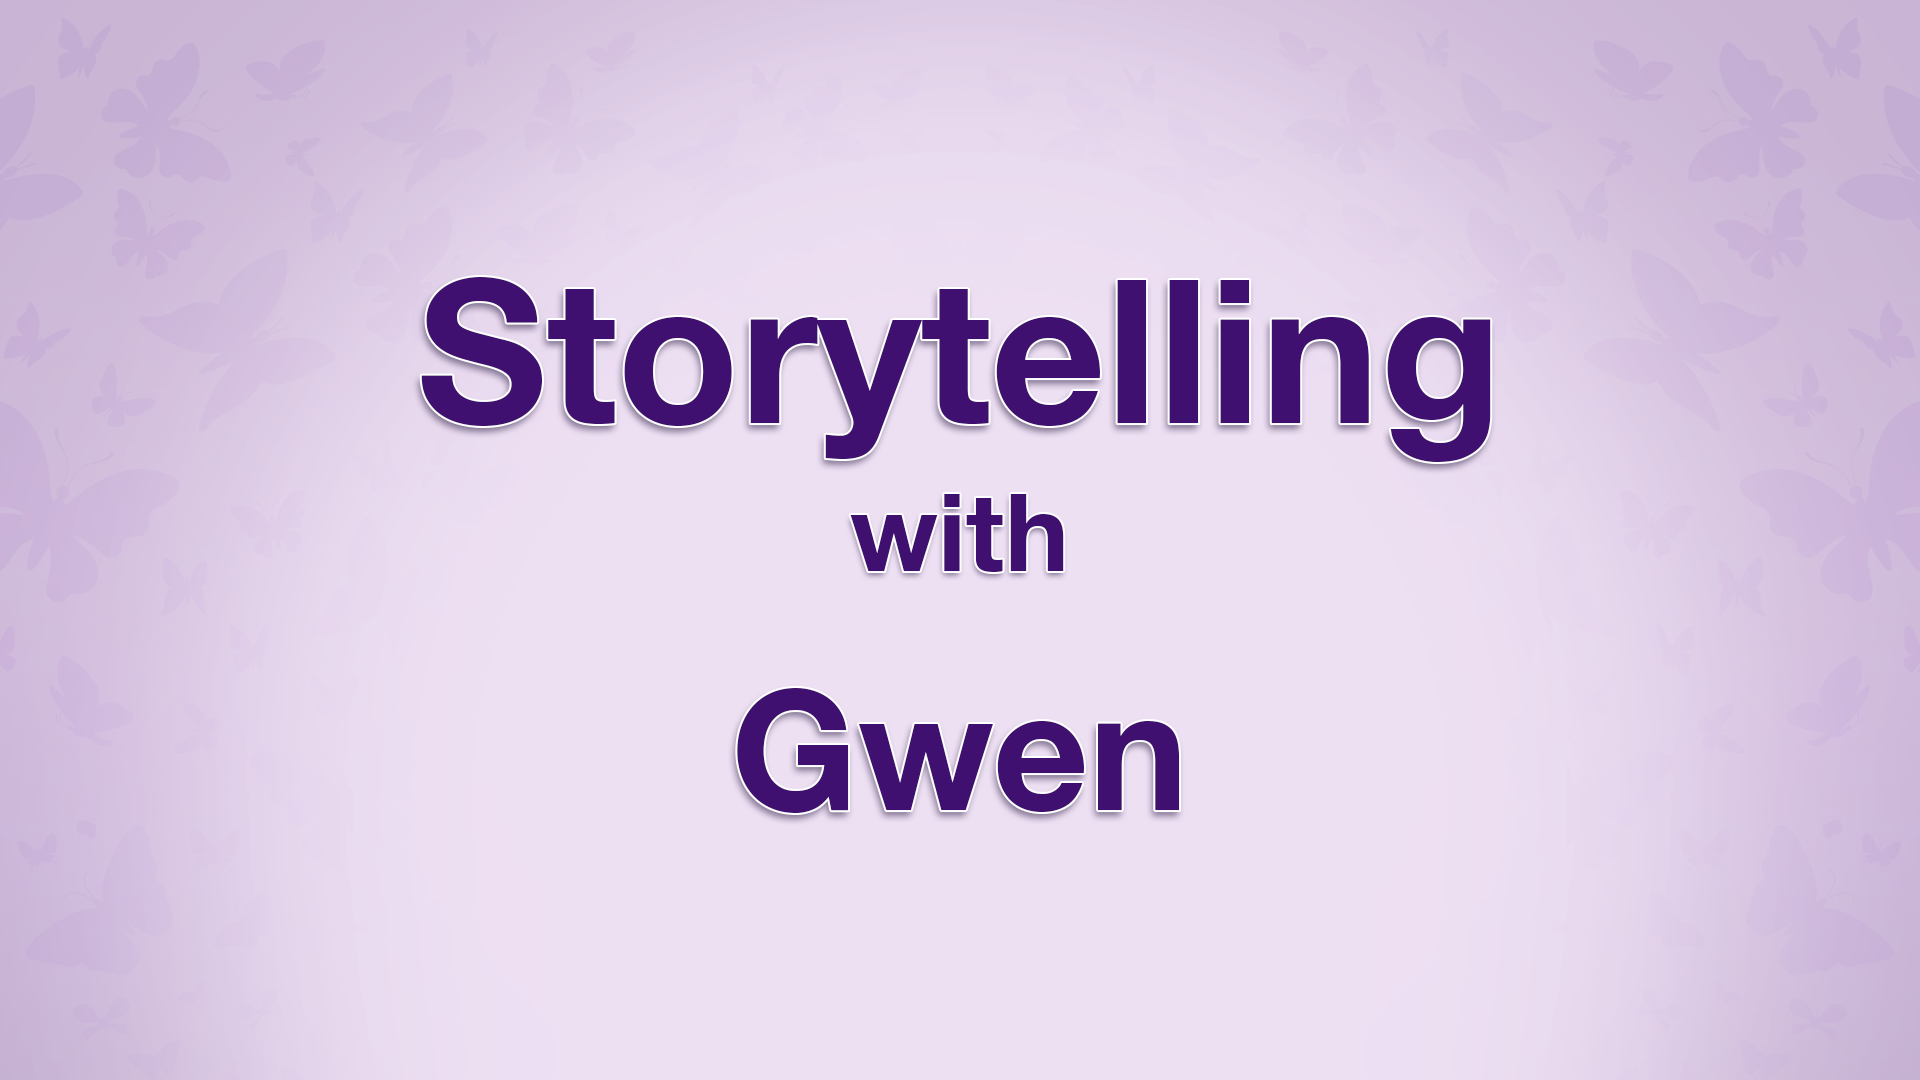 HEAR GWEN'S STORY